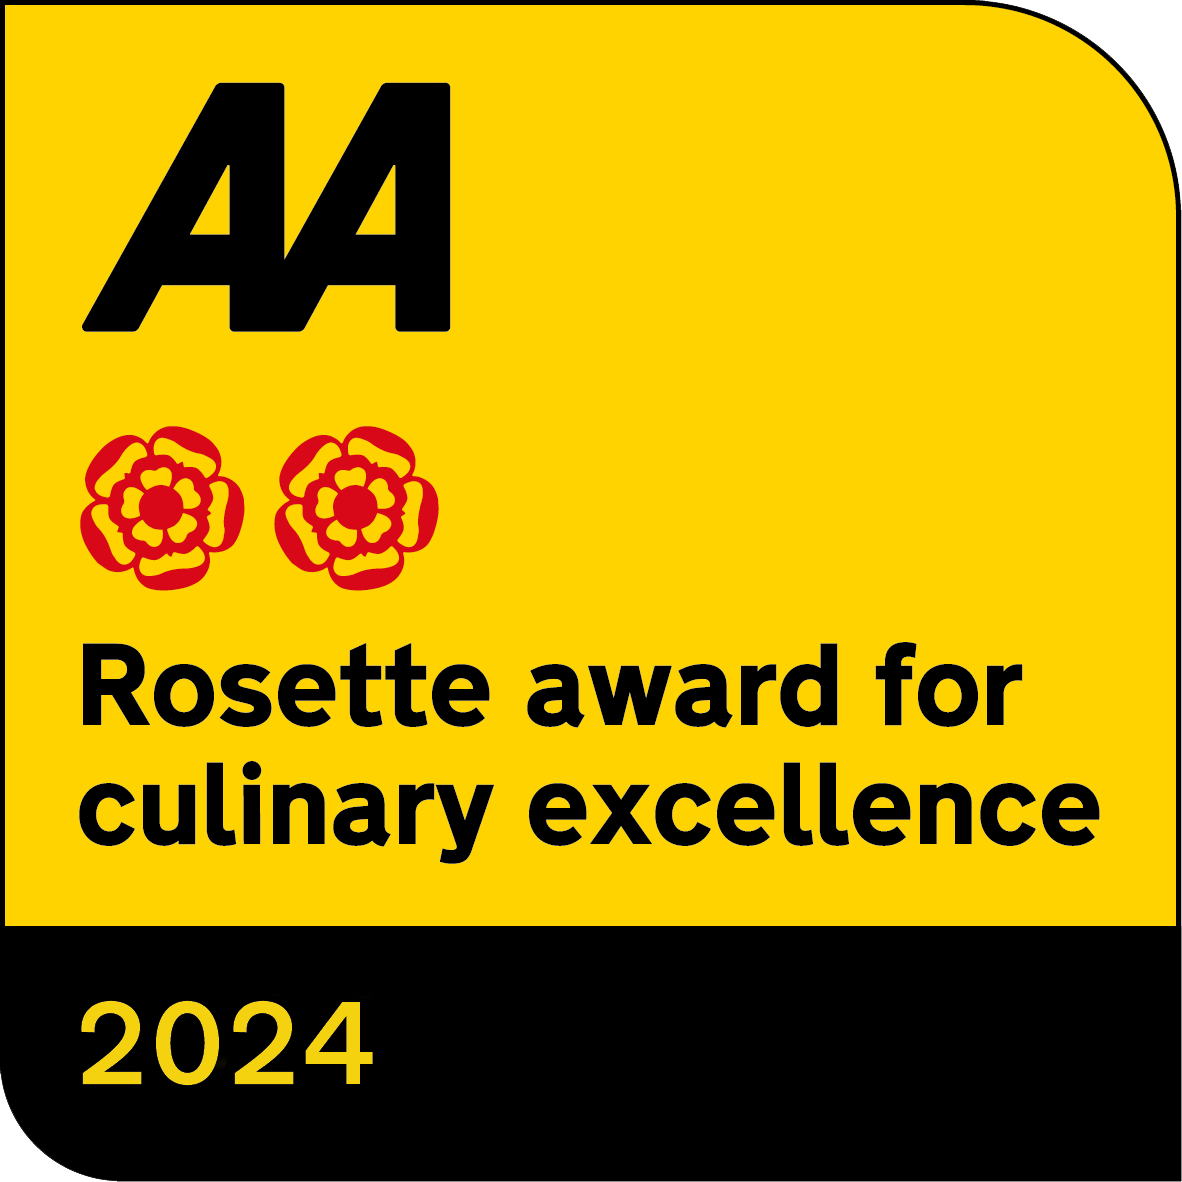 AA 2 Rosette Award 2024